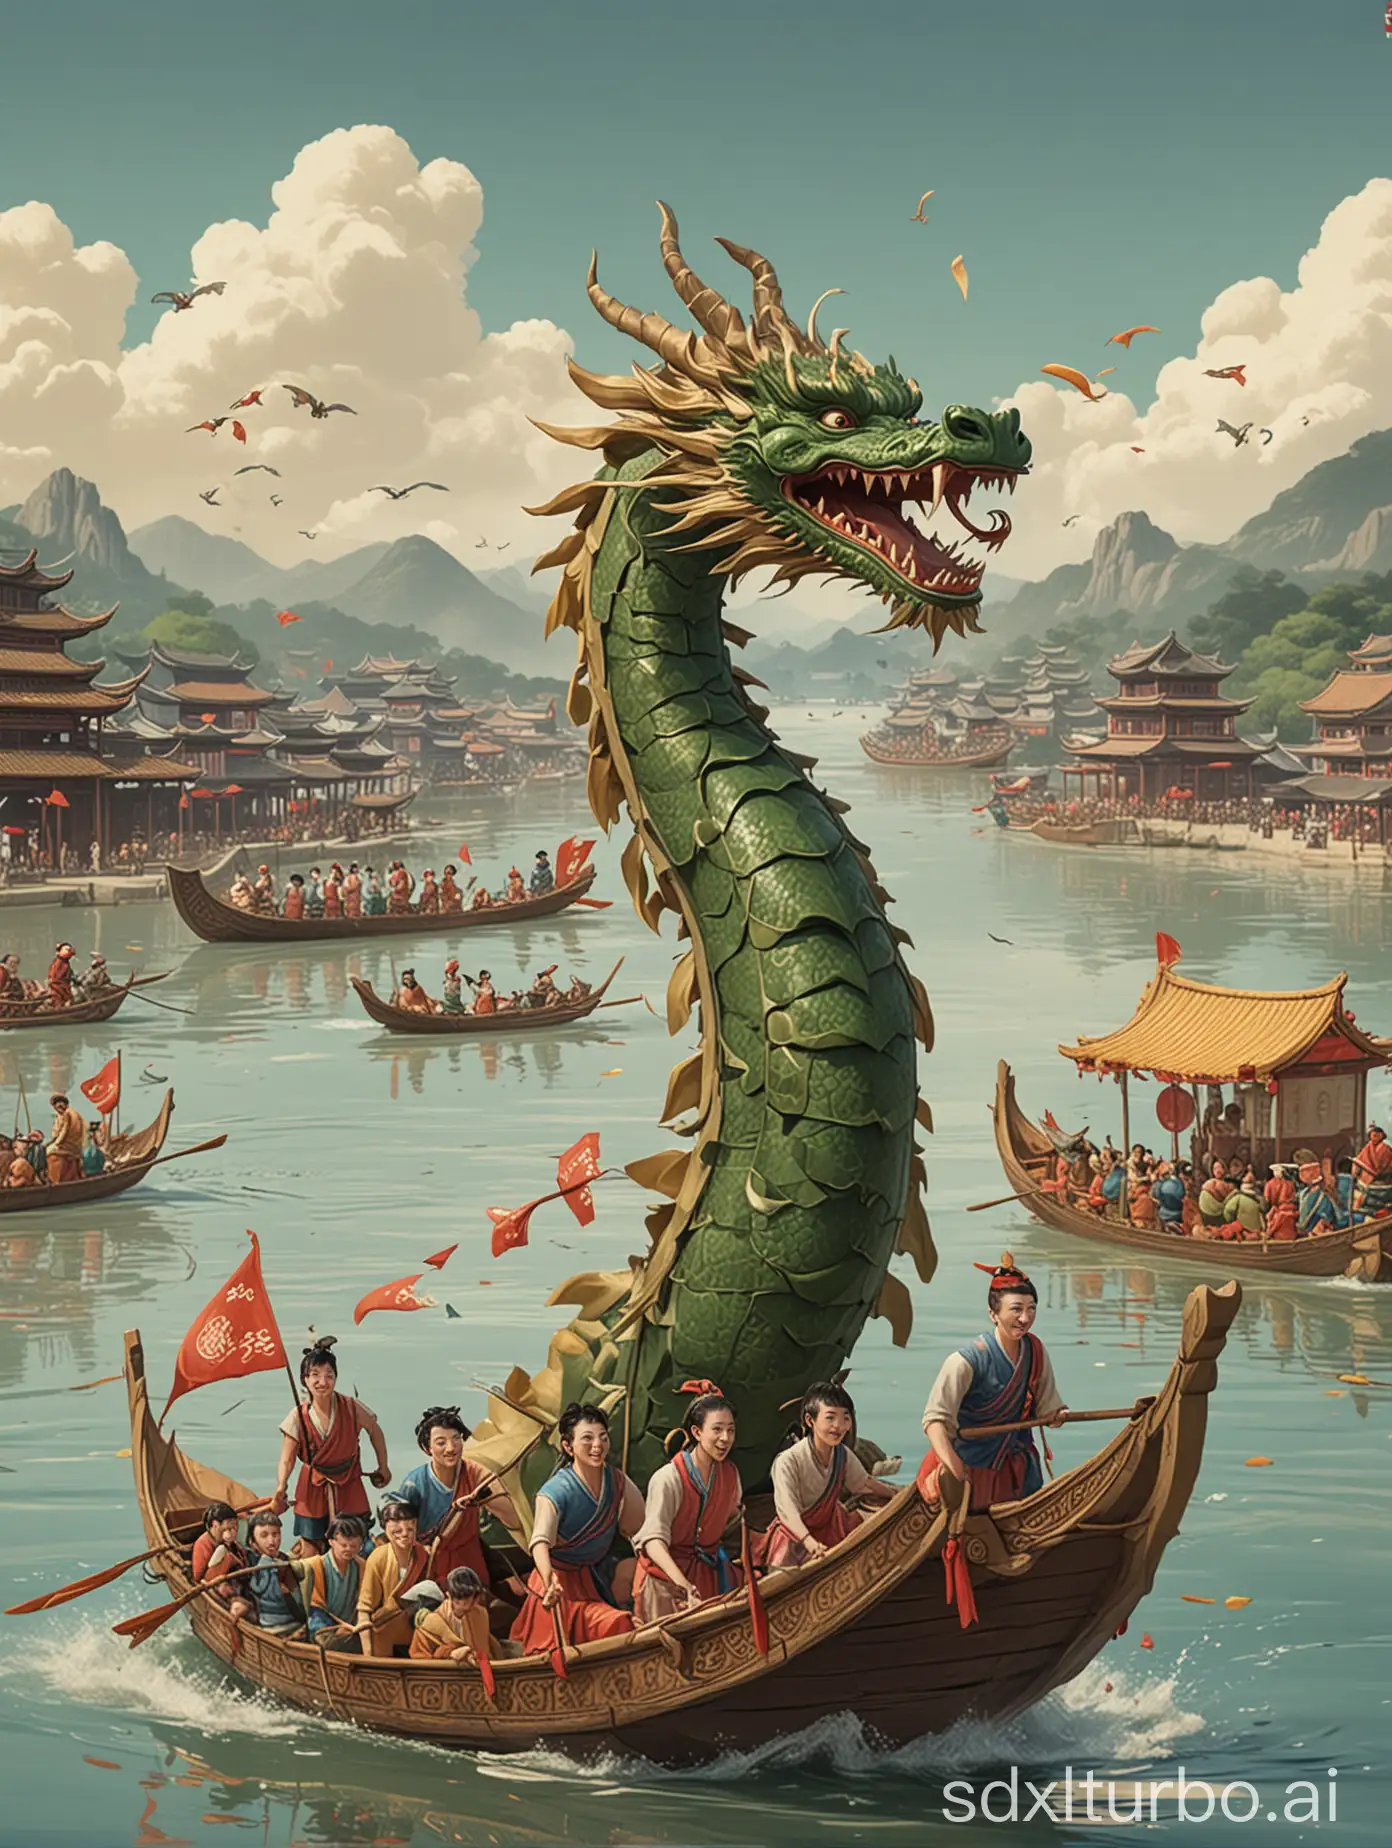 Colorful-Dragon-Boat-Festival-Animation-Picture-Celebrating-Ningbo-Regional-Culture